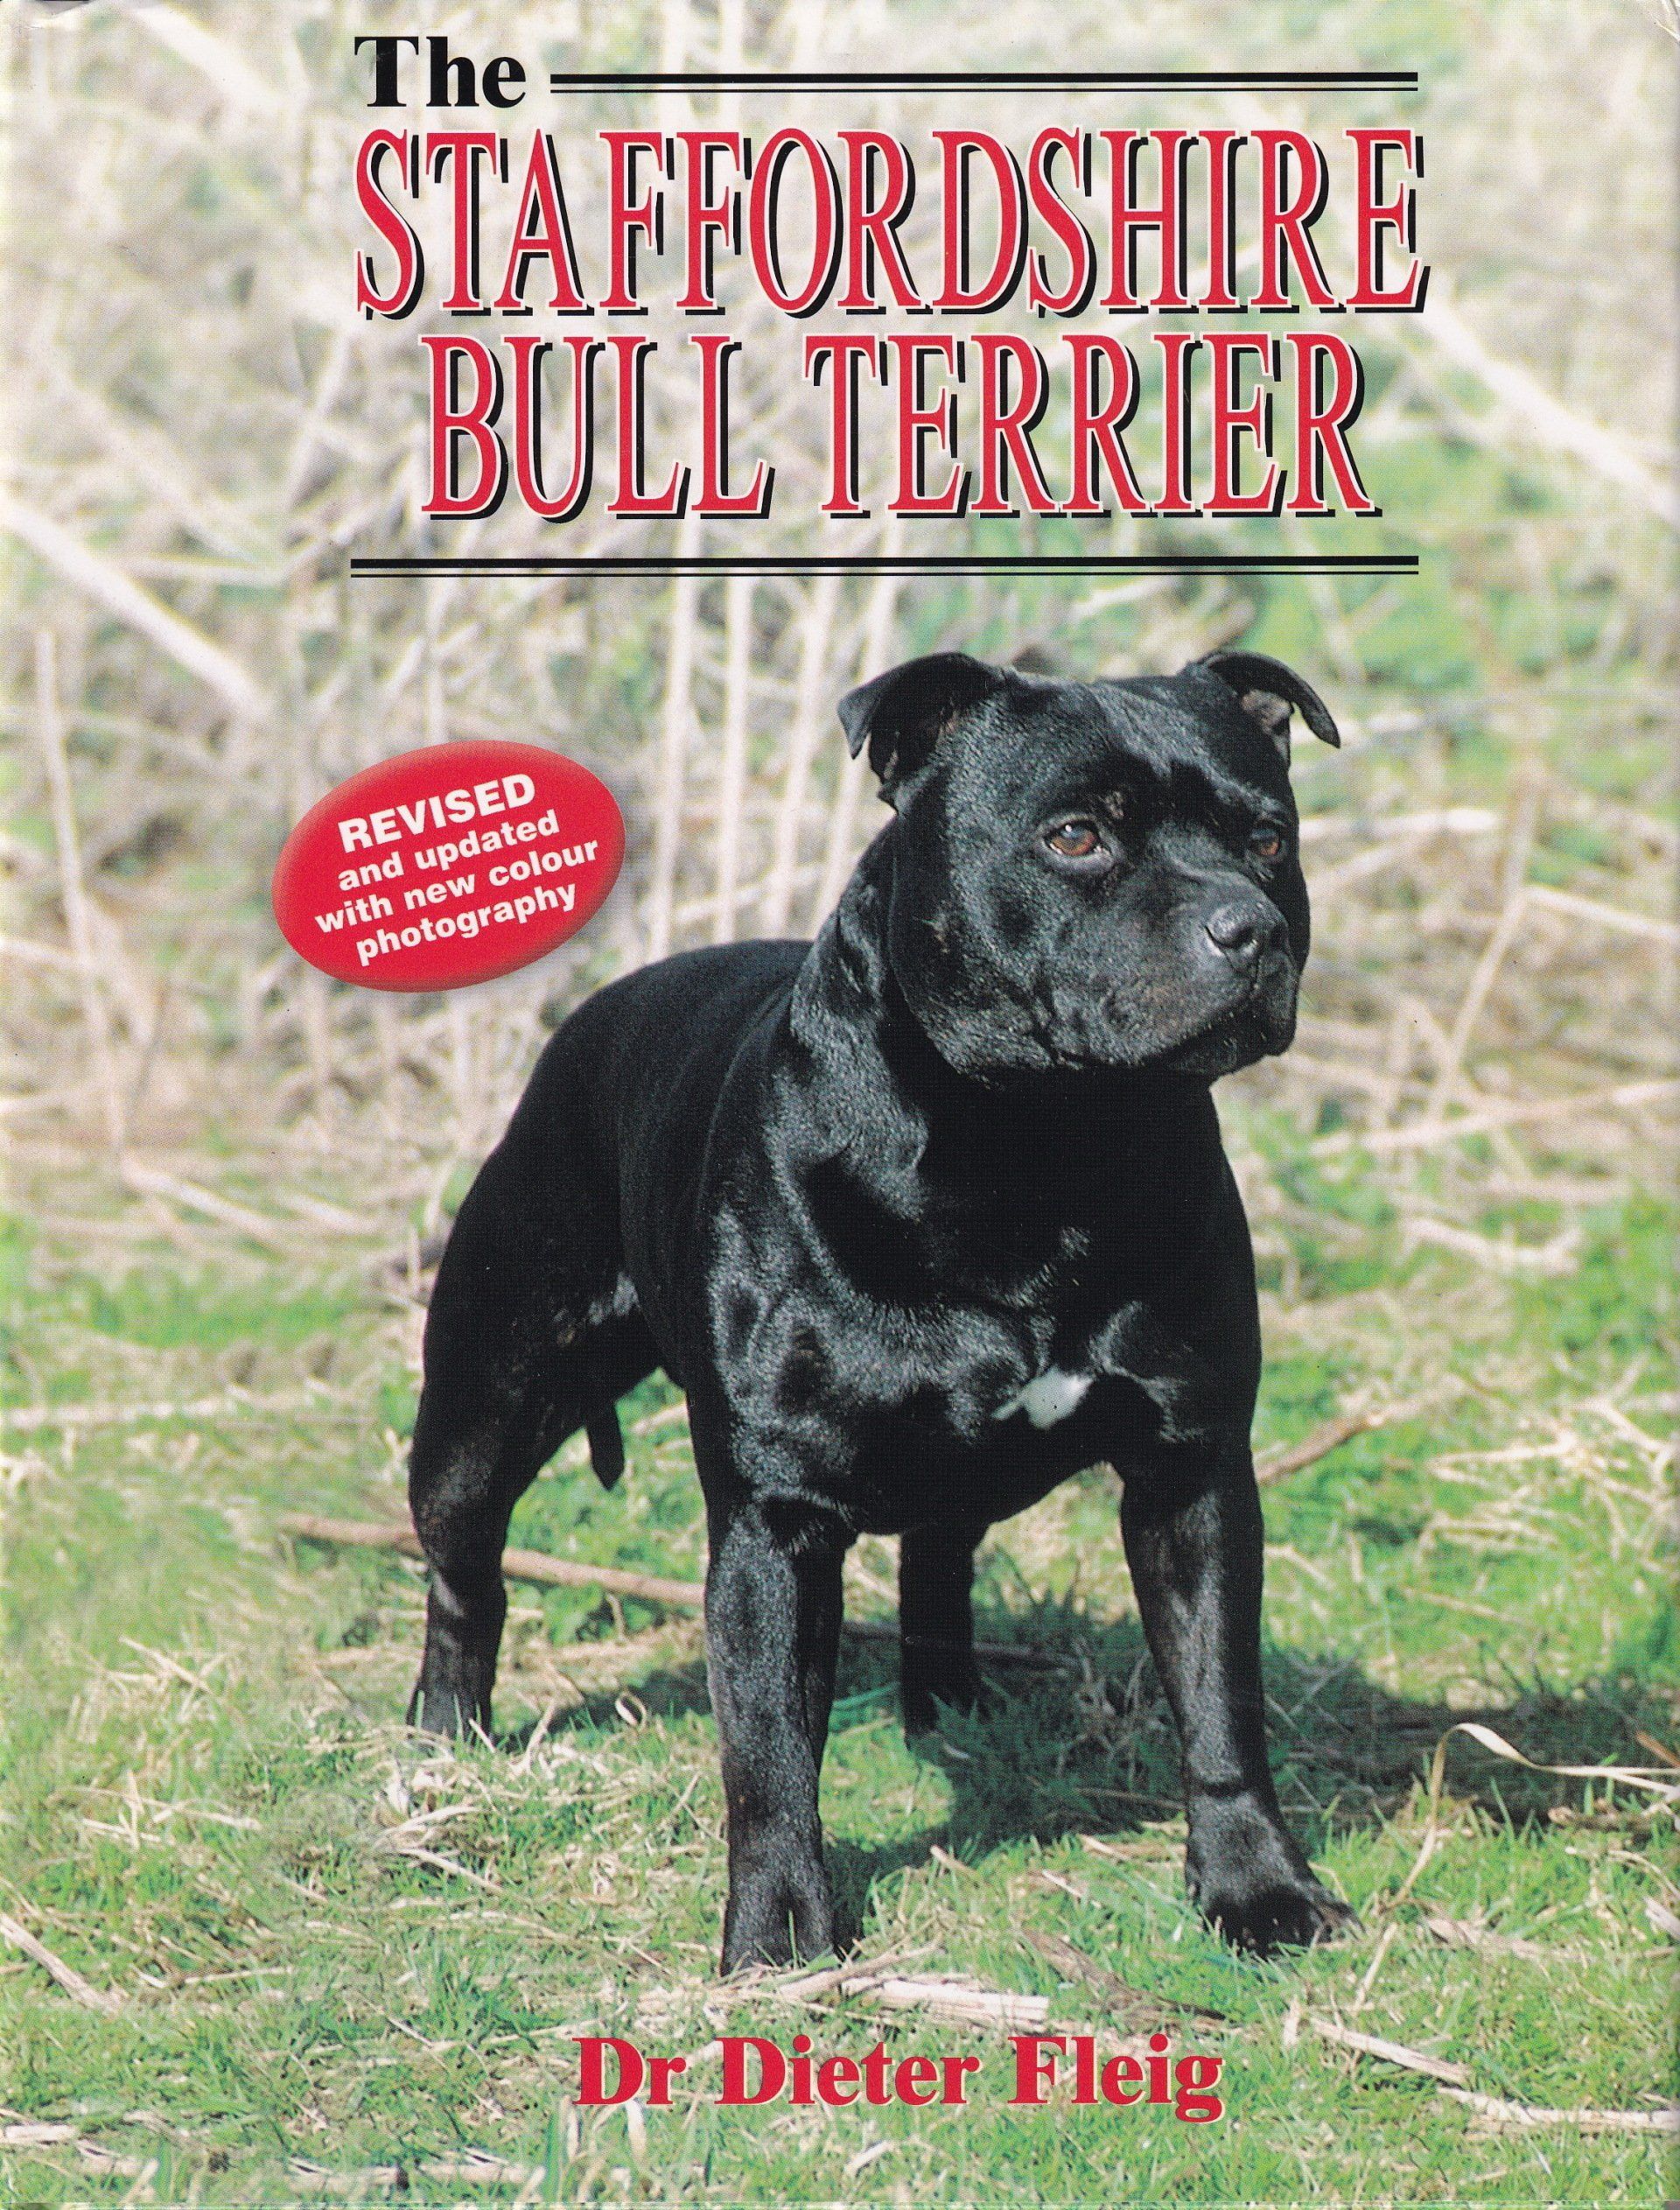 The Staffordshire Bull Terrier by Dieter Fleig